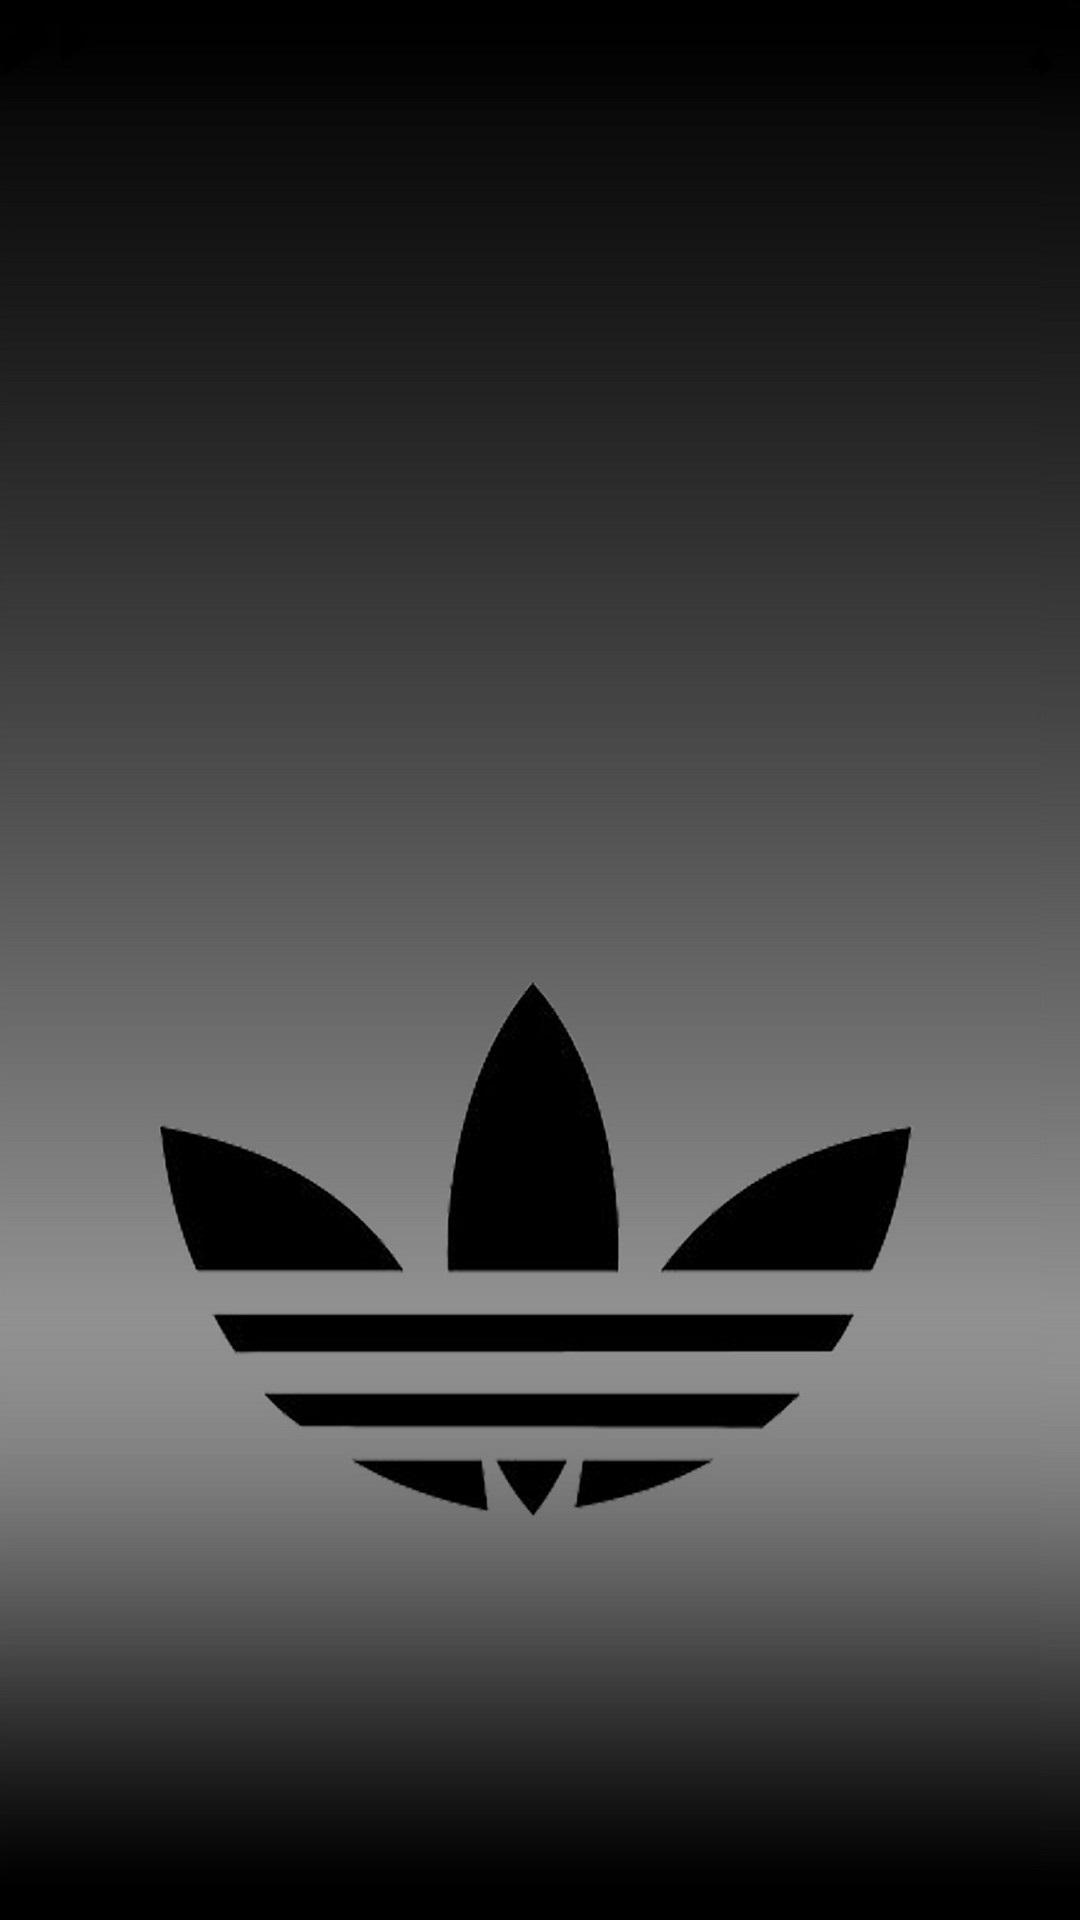 adidas logo wallpaper hd 2022